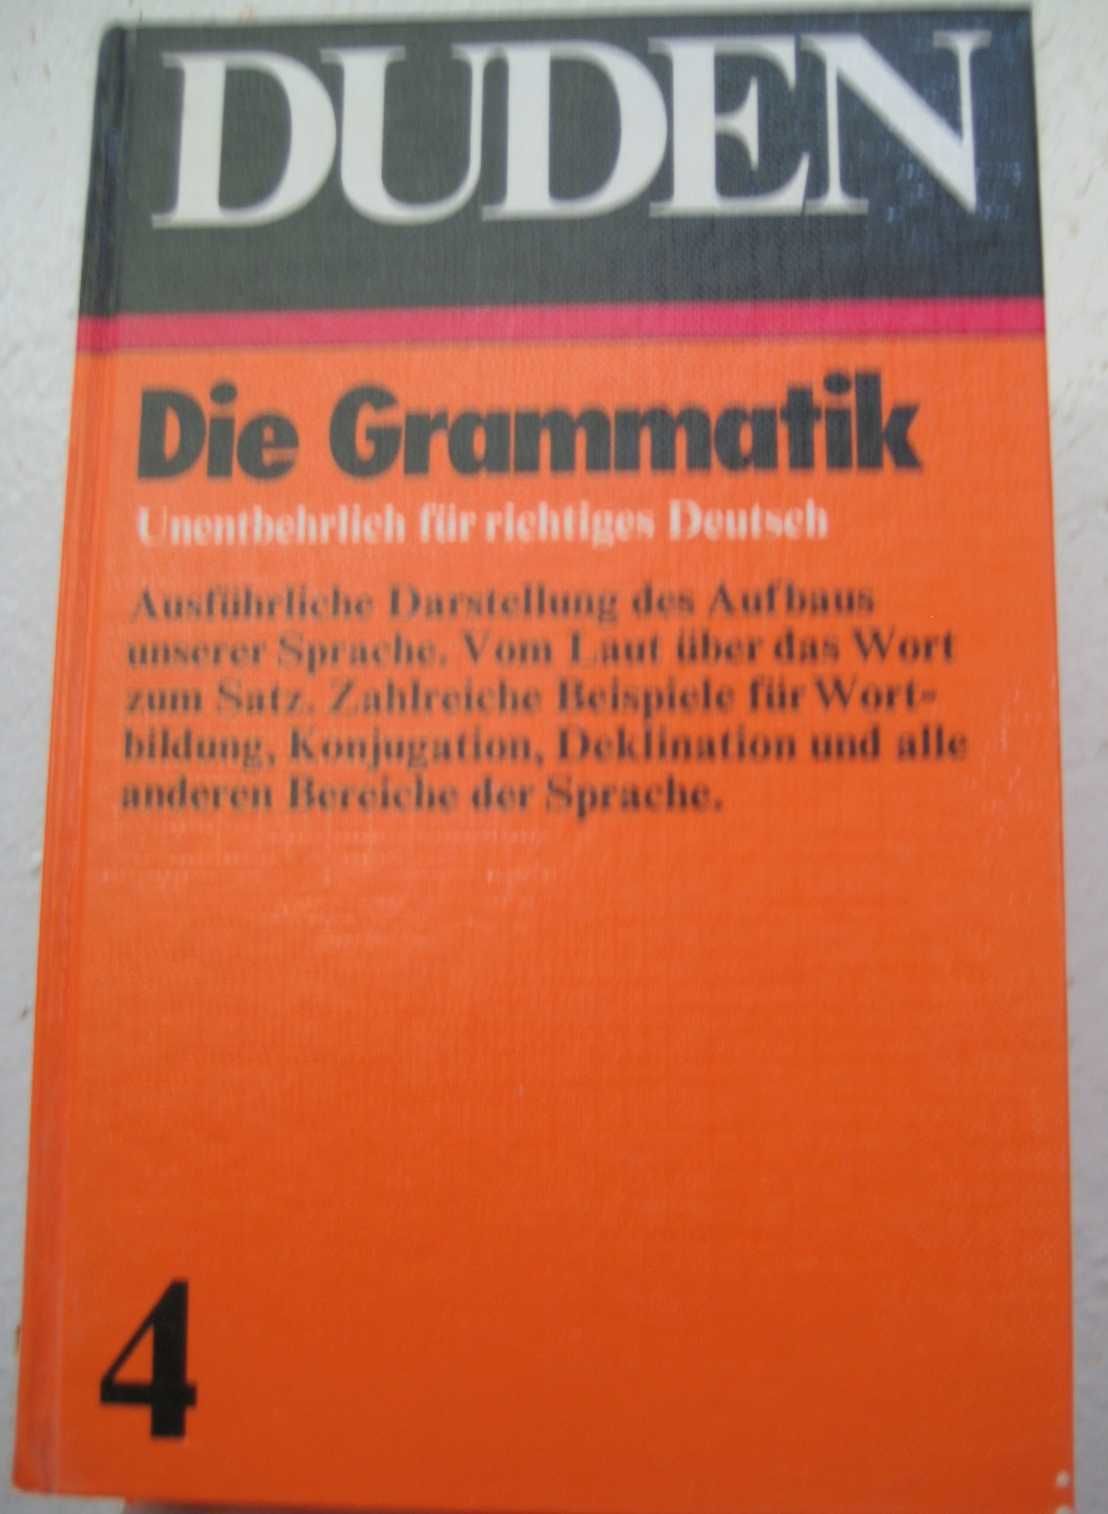 немецкий словари грамматика